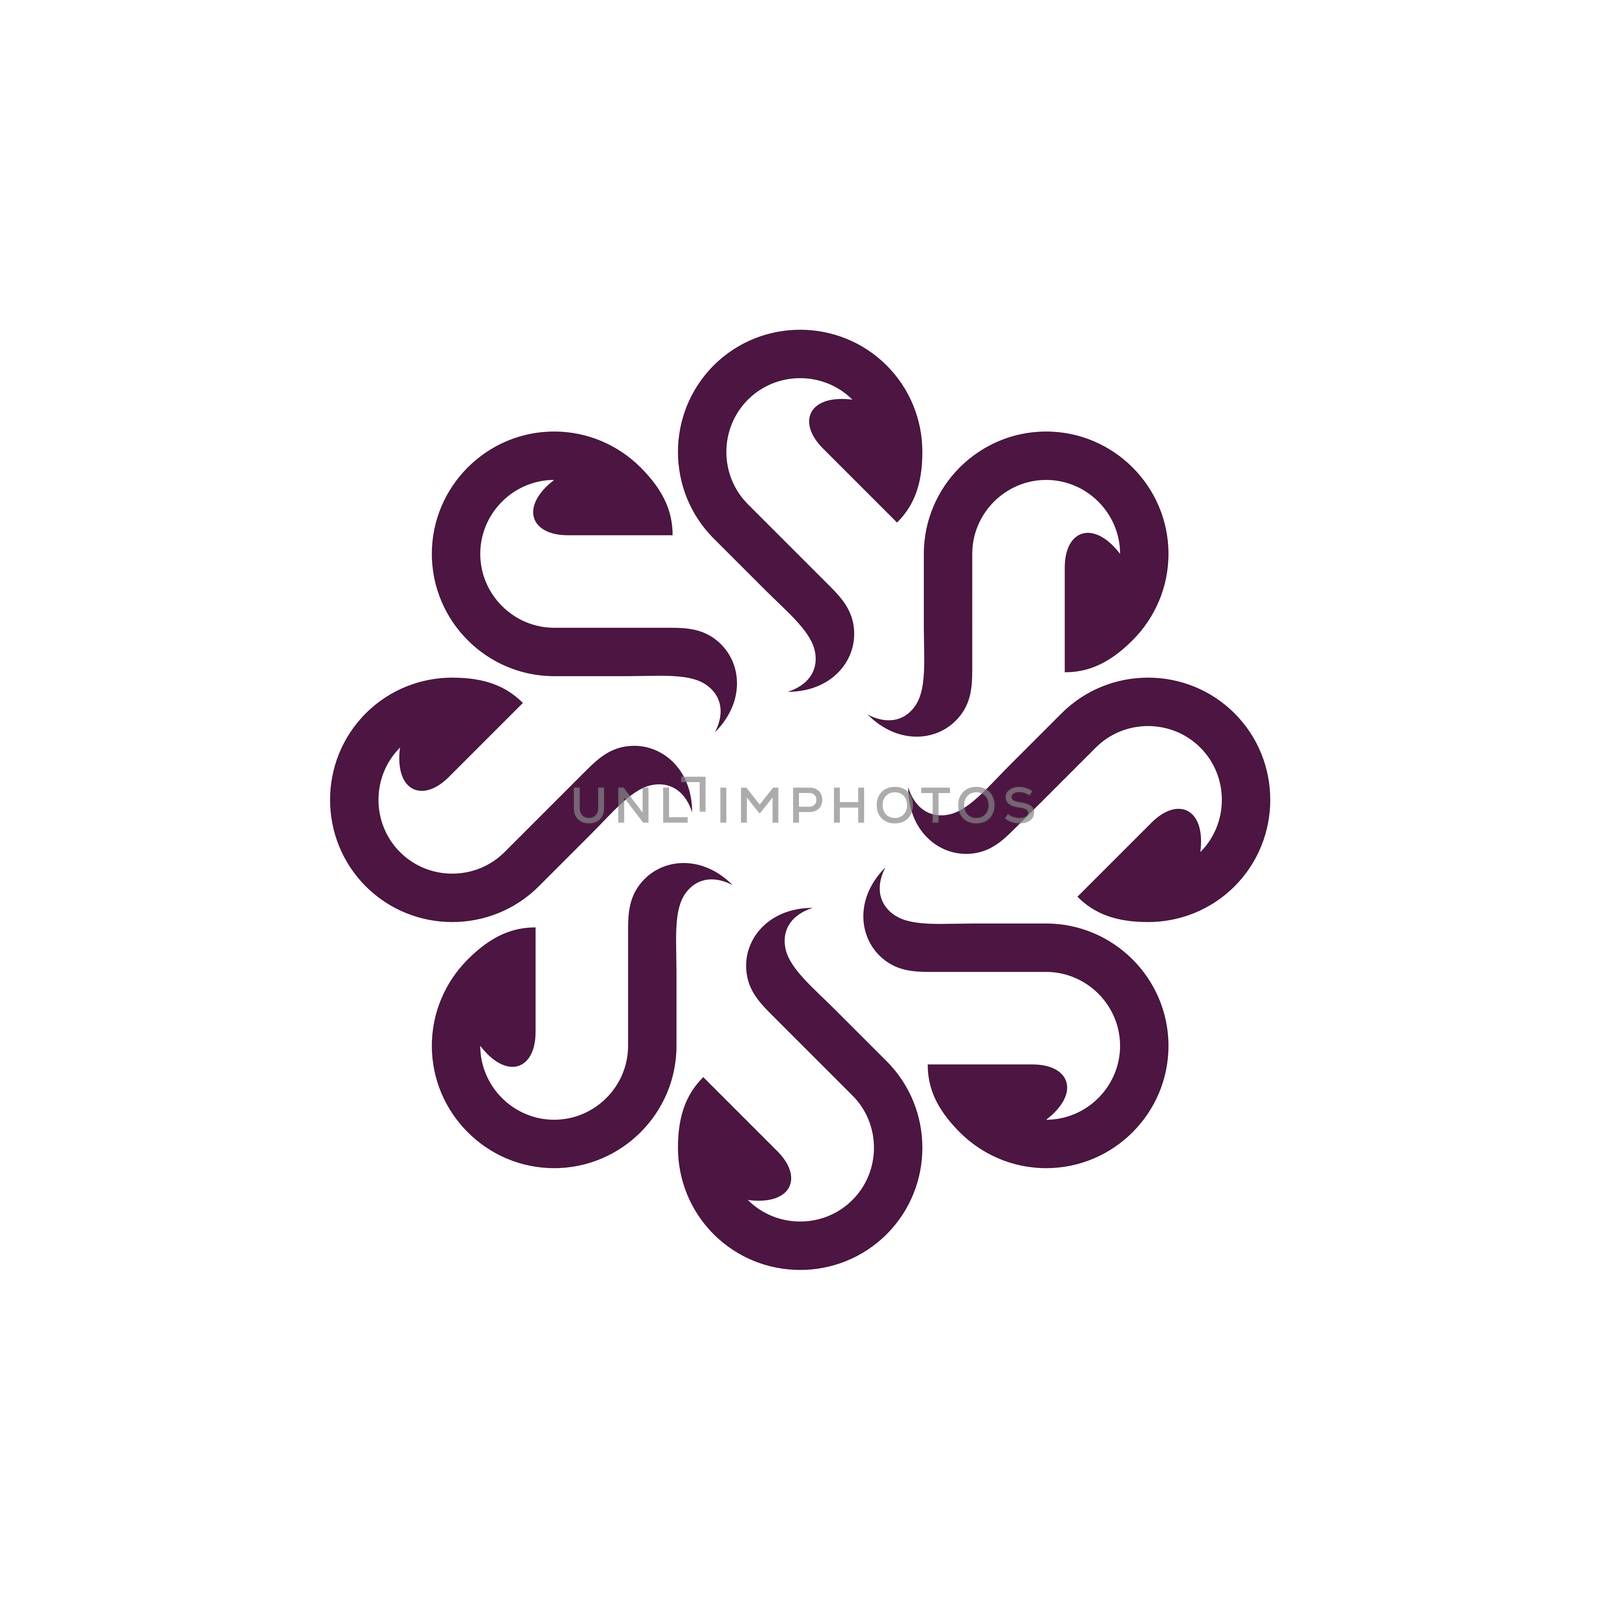 Purple Ornamental Flower or Star Logo Template Illustration Design. Vector EPS 10.